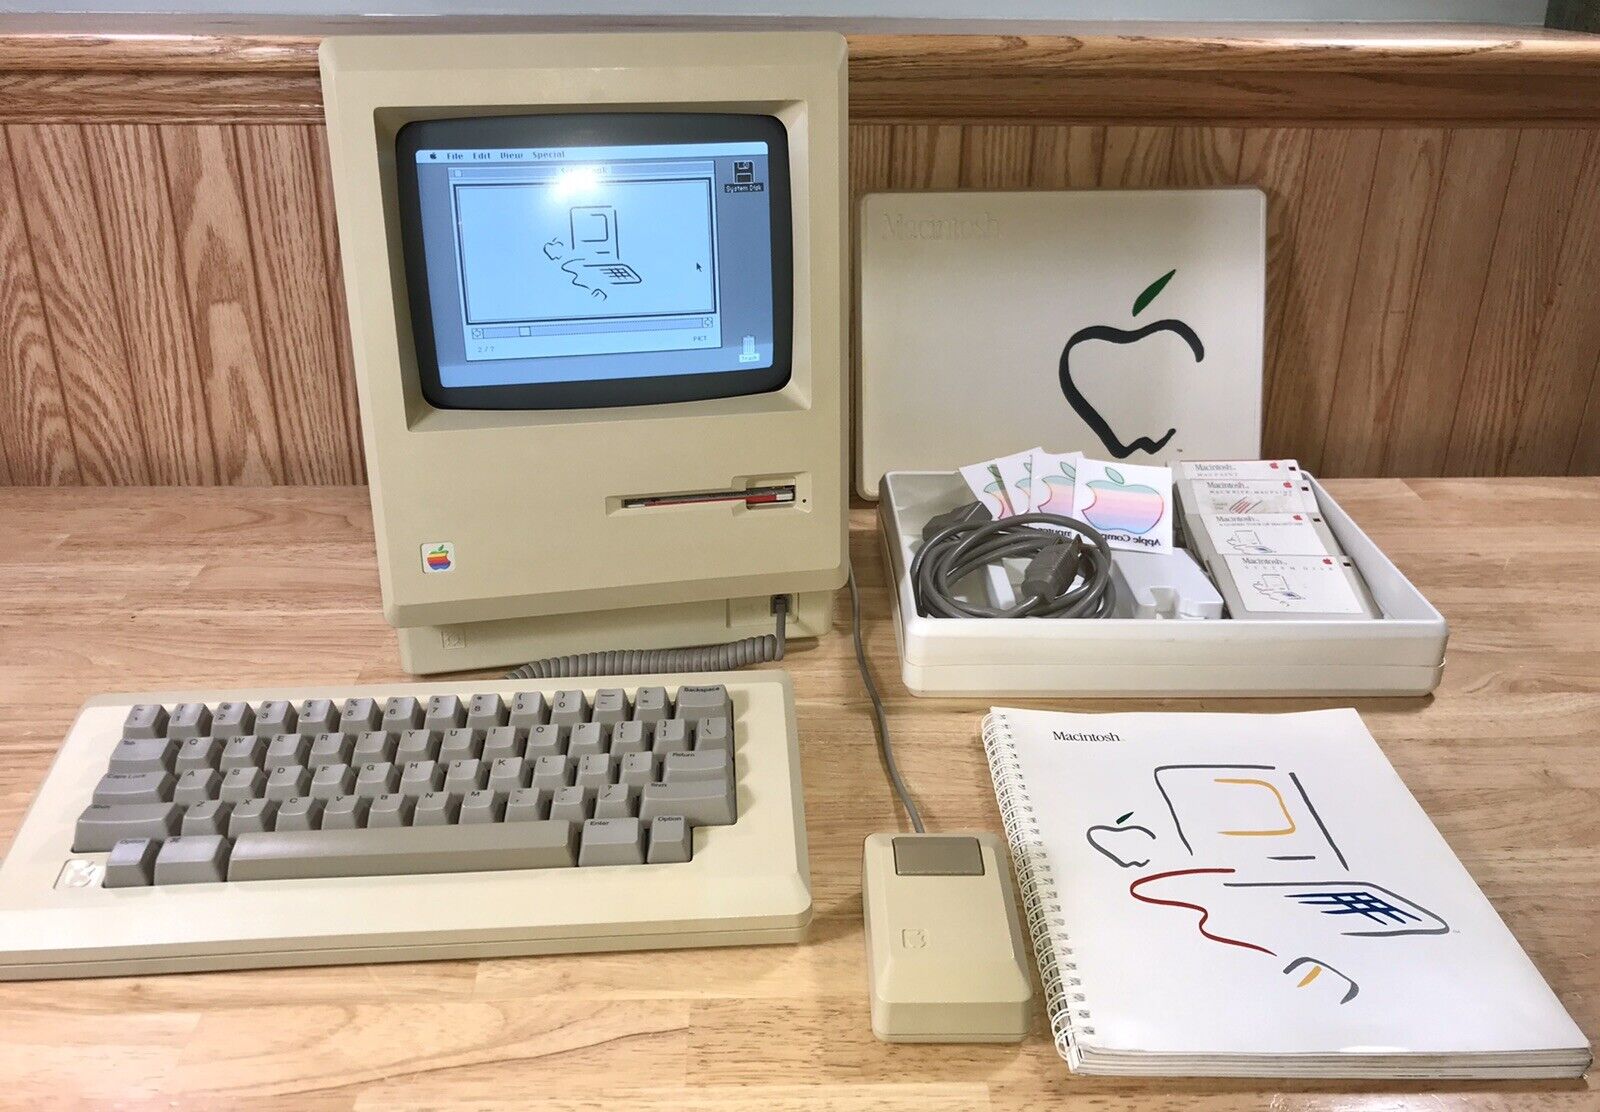 1984 APPLE MACINTOSH 128K FIRST MAC Model M0001 + PICASSO KIT All WORKING NICE